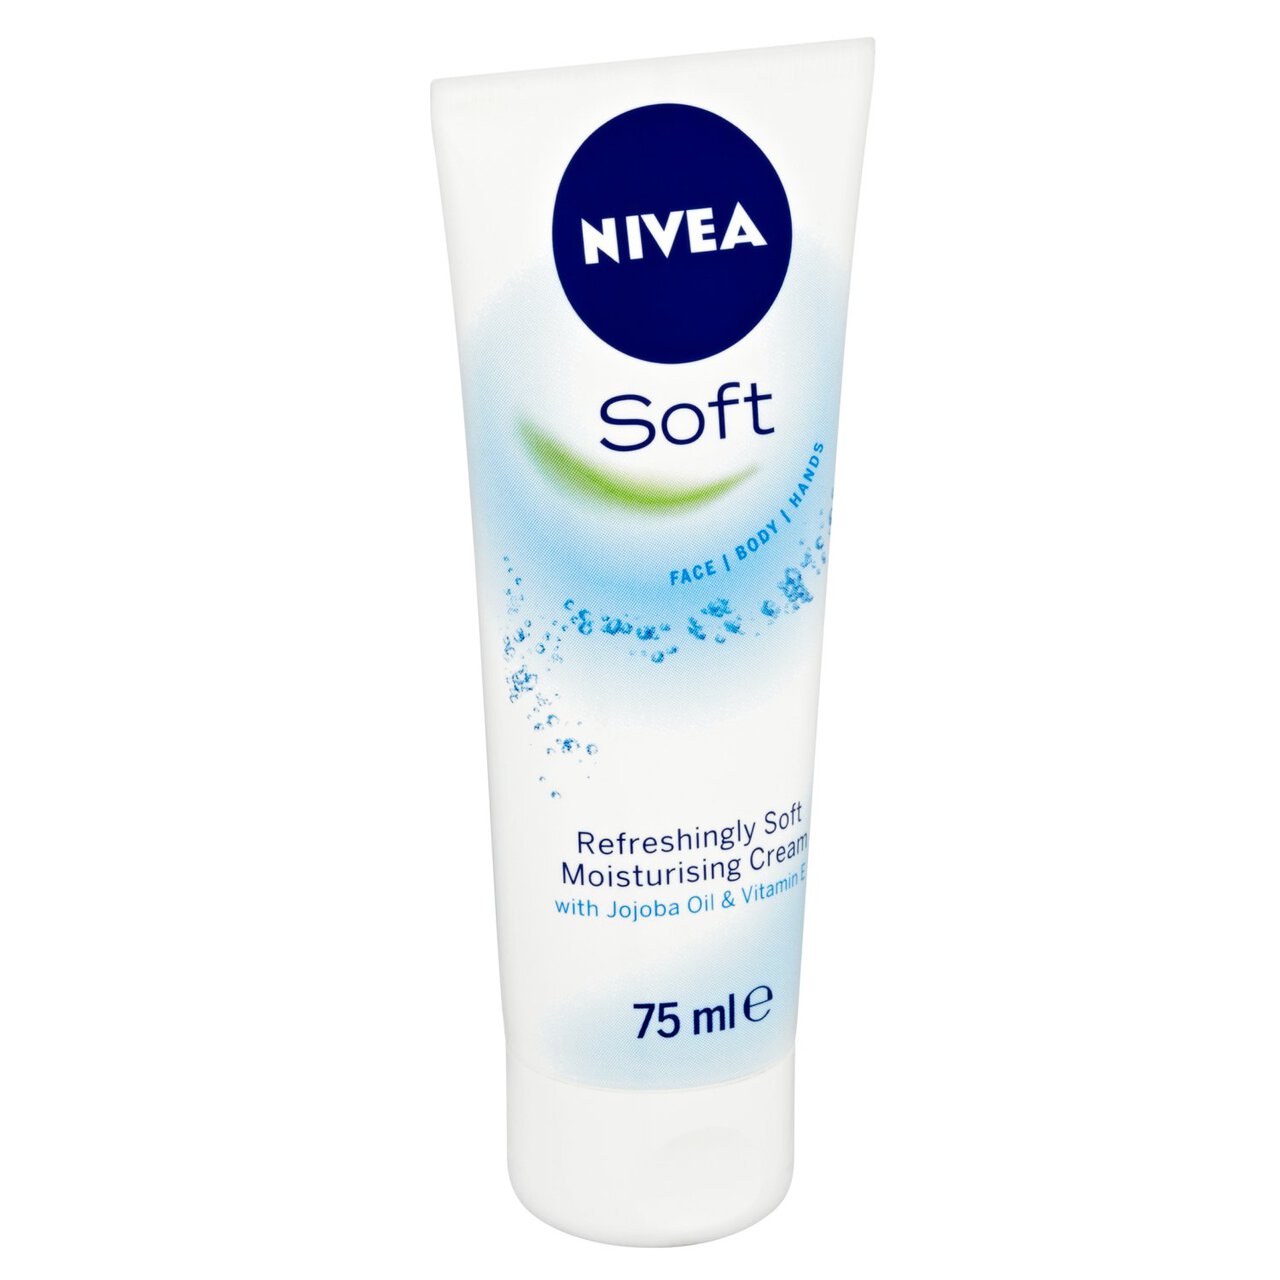 NIVEA Soft Moisturiser Cream for face, hands and body, 75ml